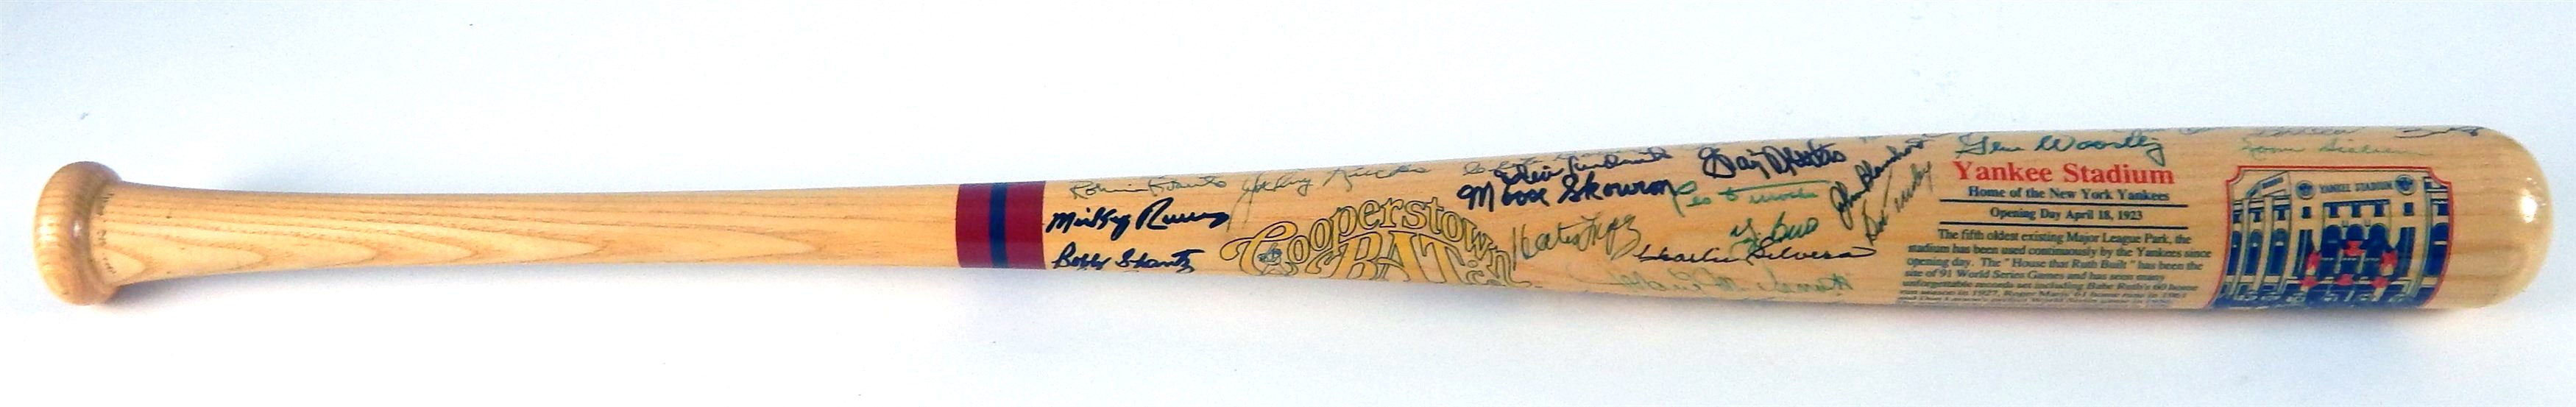 Baseball Autographs - Yankee Stadium Legends Signed Bat (35+)